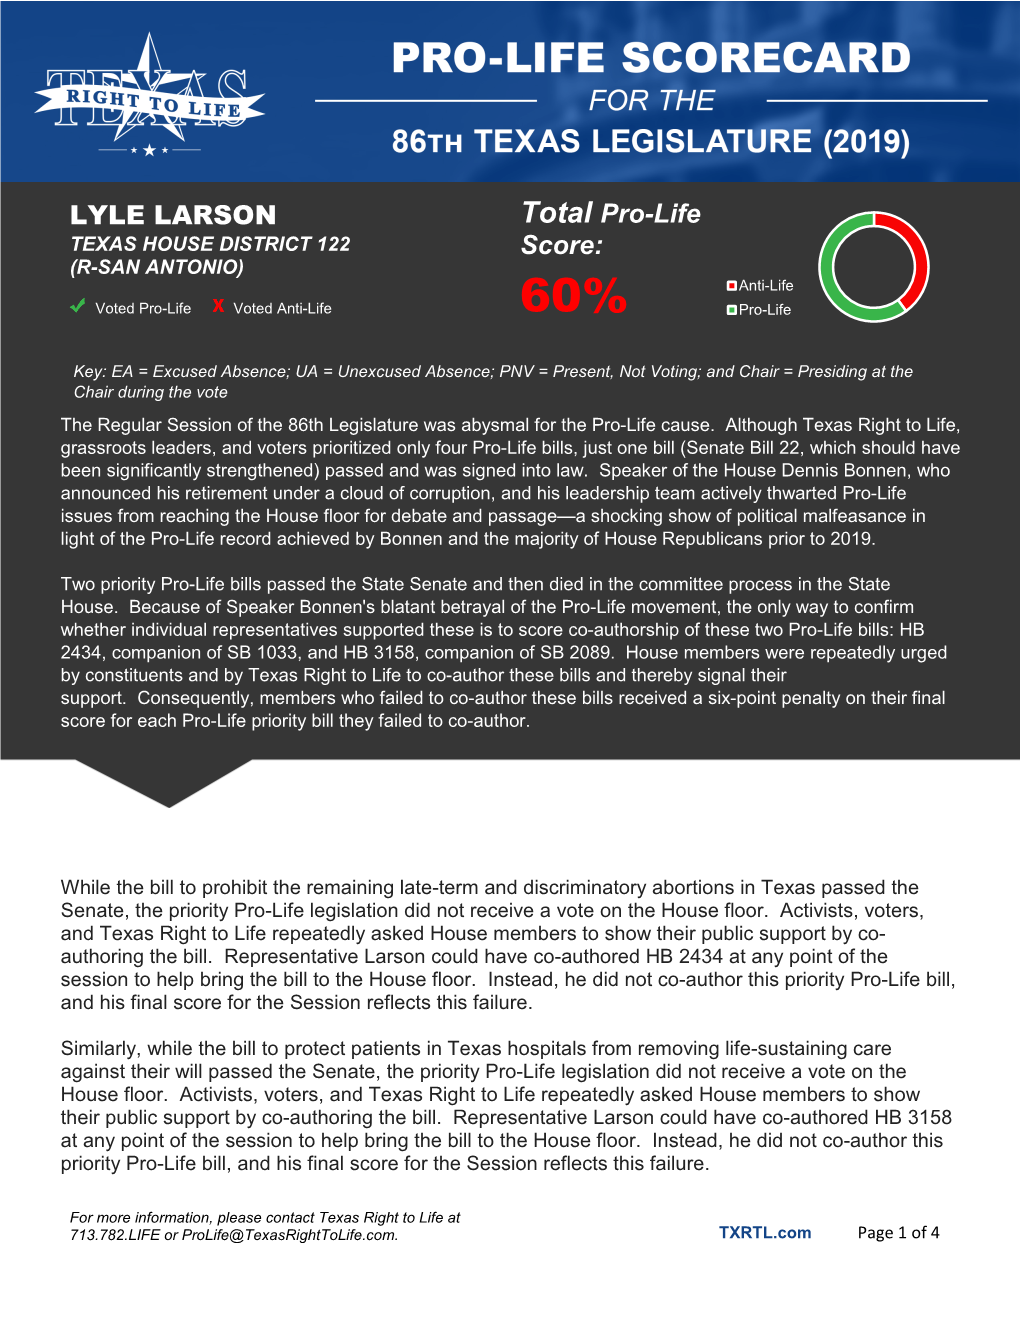 LYLE LARSON Total Pro-Life Score